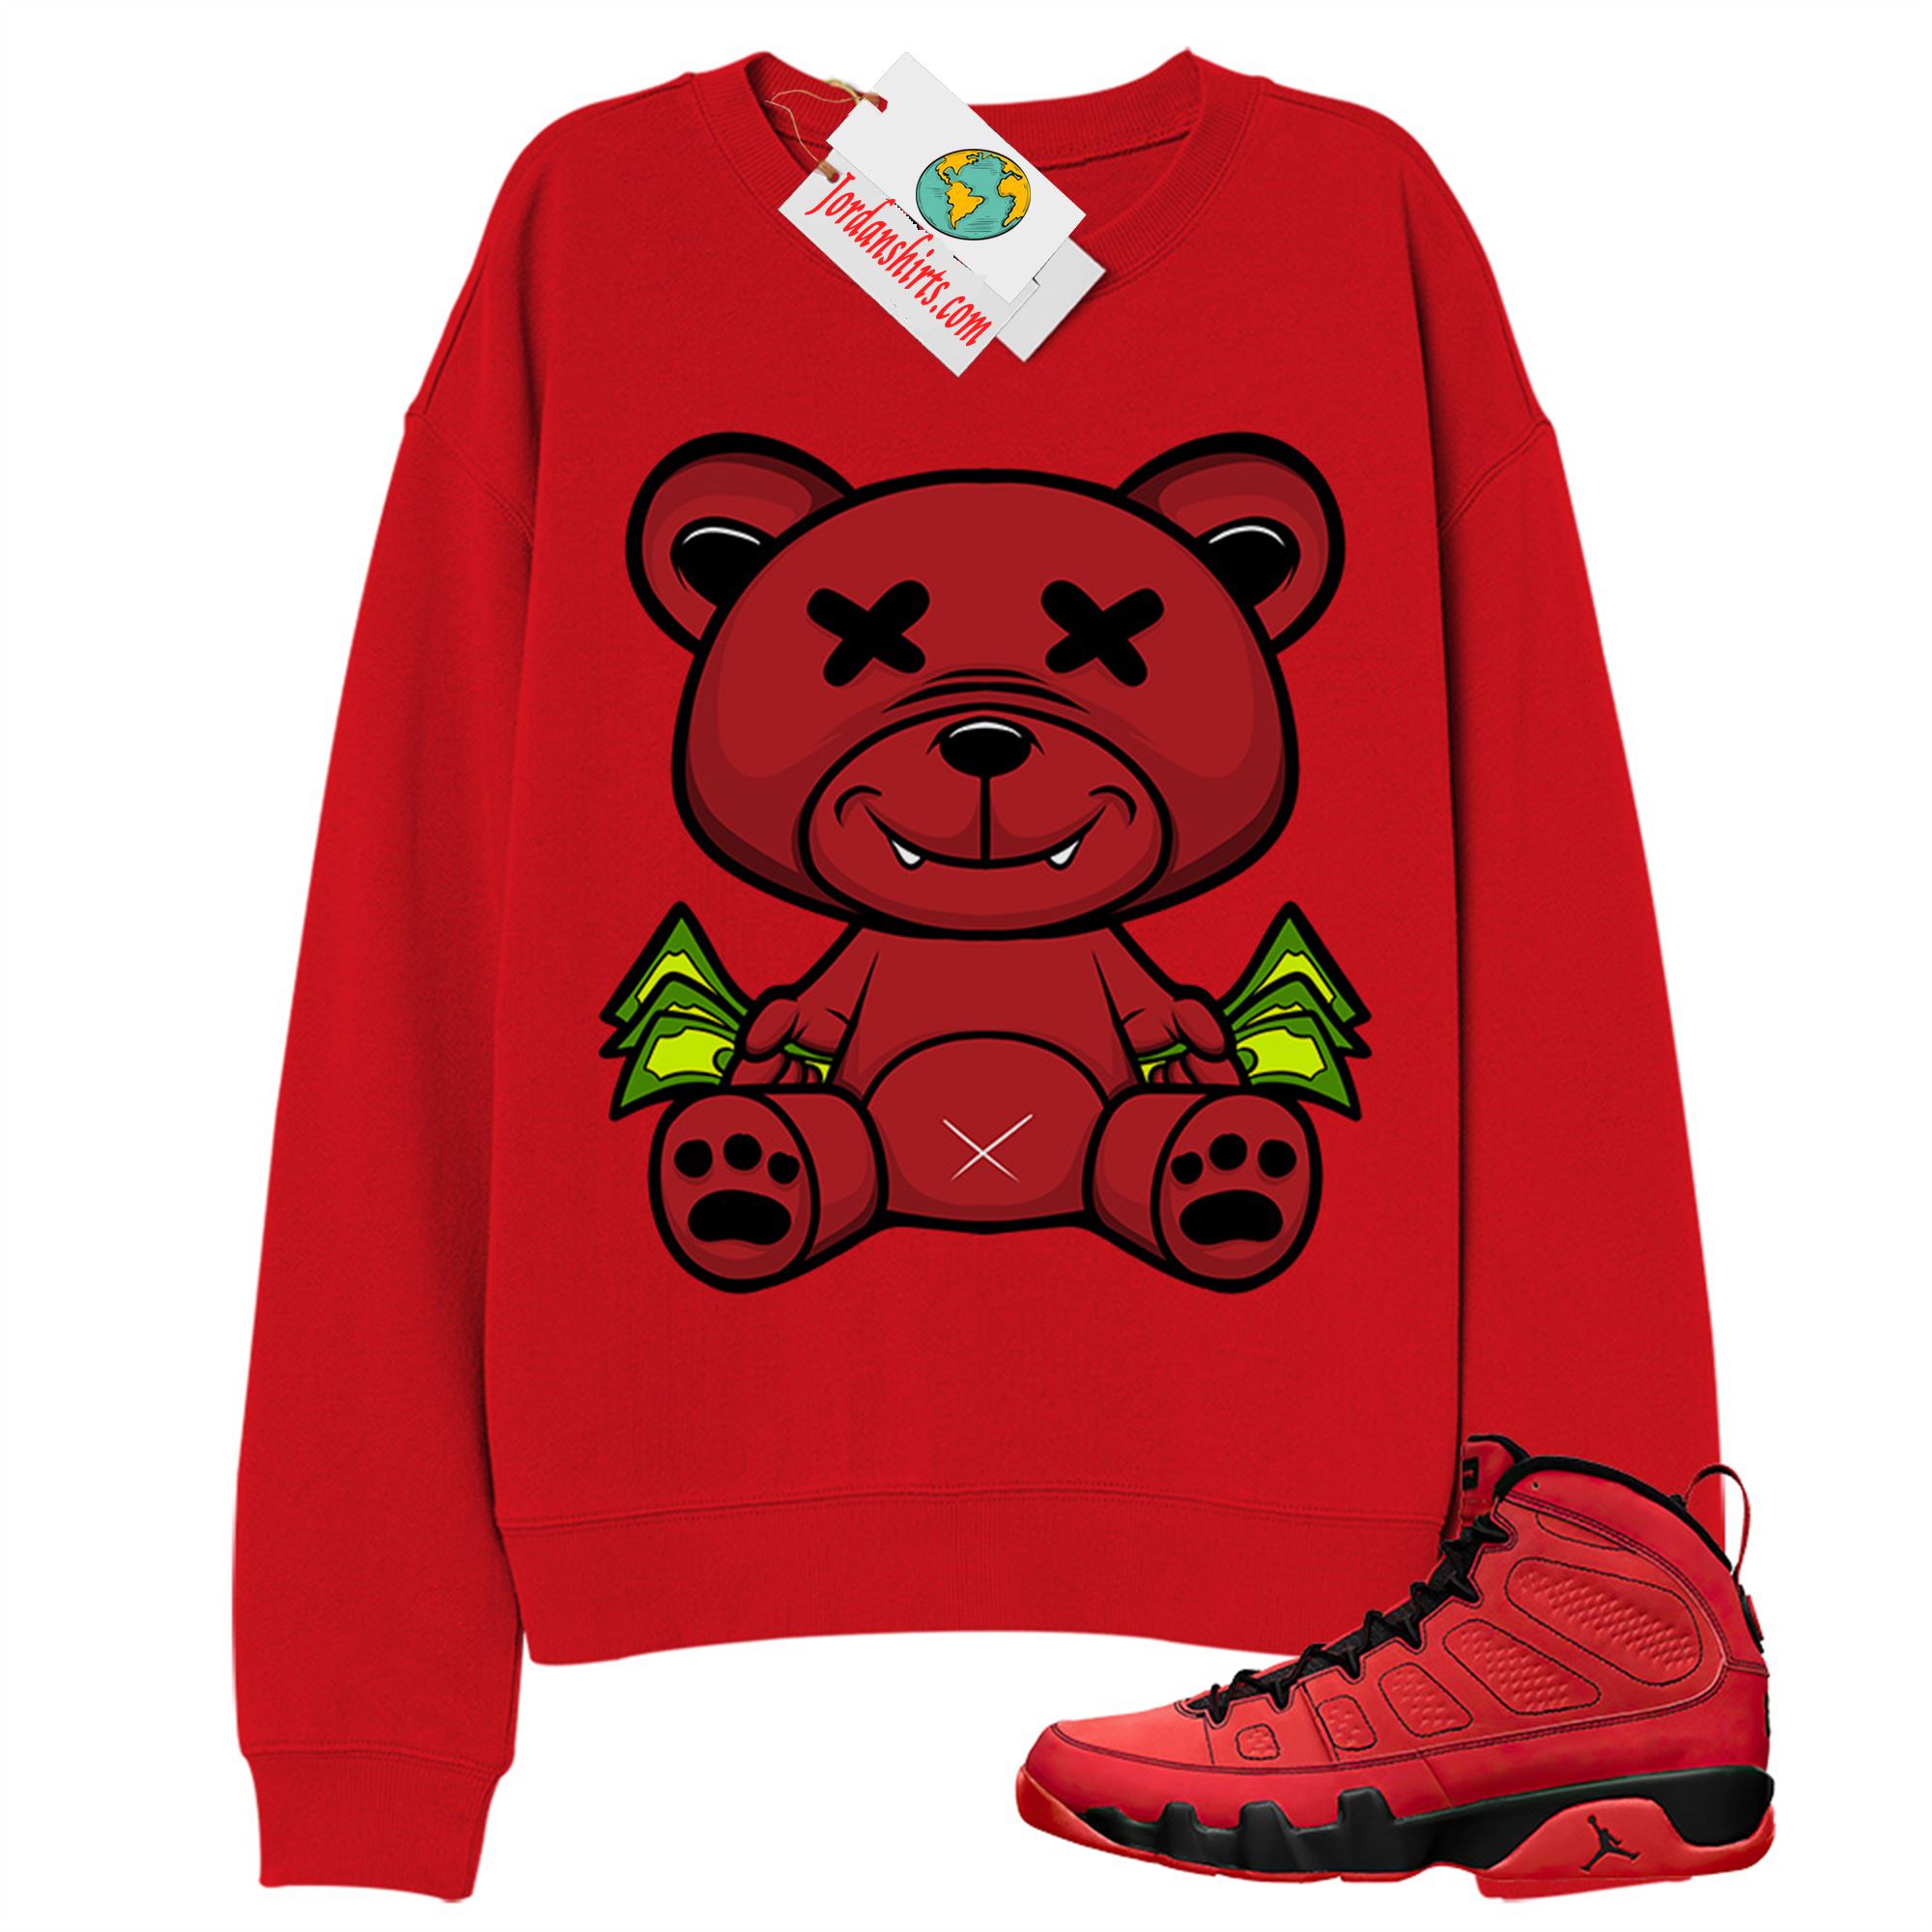 Jordan 9 Sweatshirt, Rich Teddy Bear Red Sweatshirt Air Jordan 9 Chile Red 9s Plus Size Up To 5xl